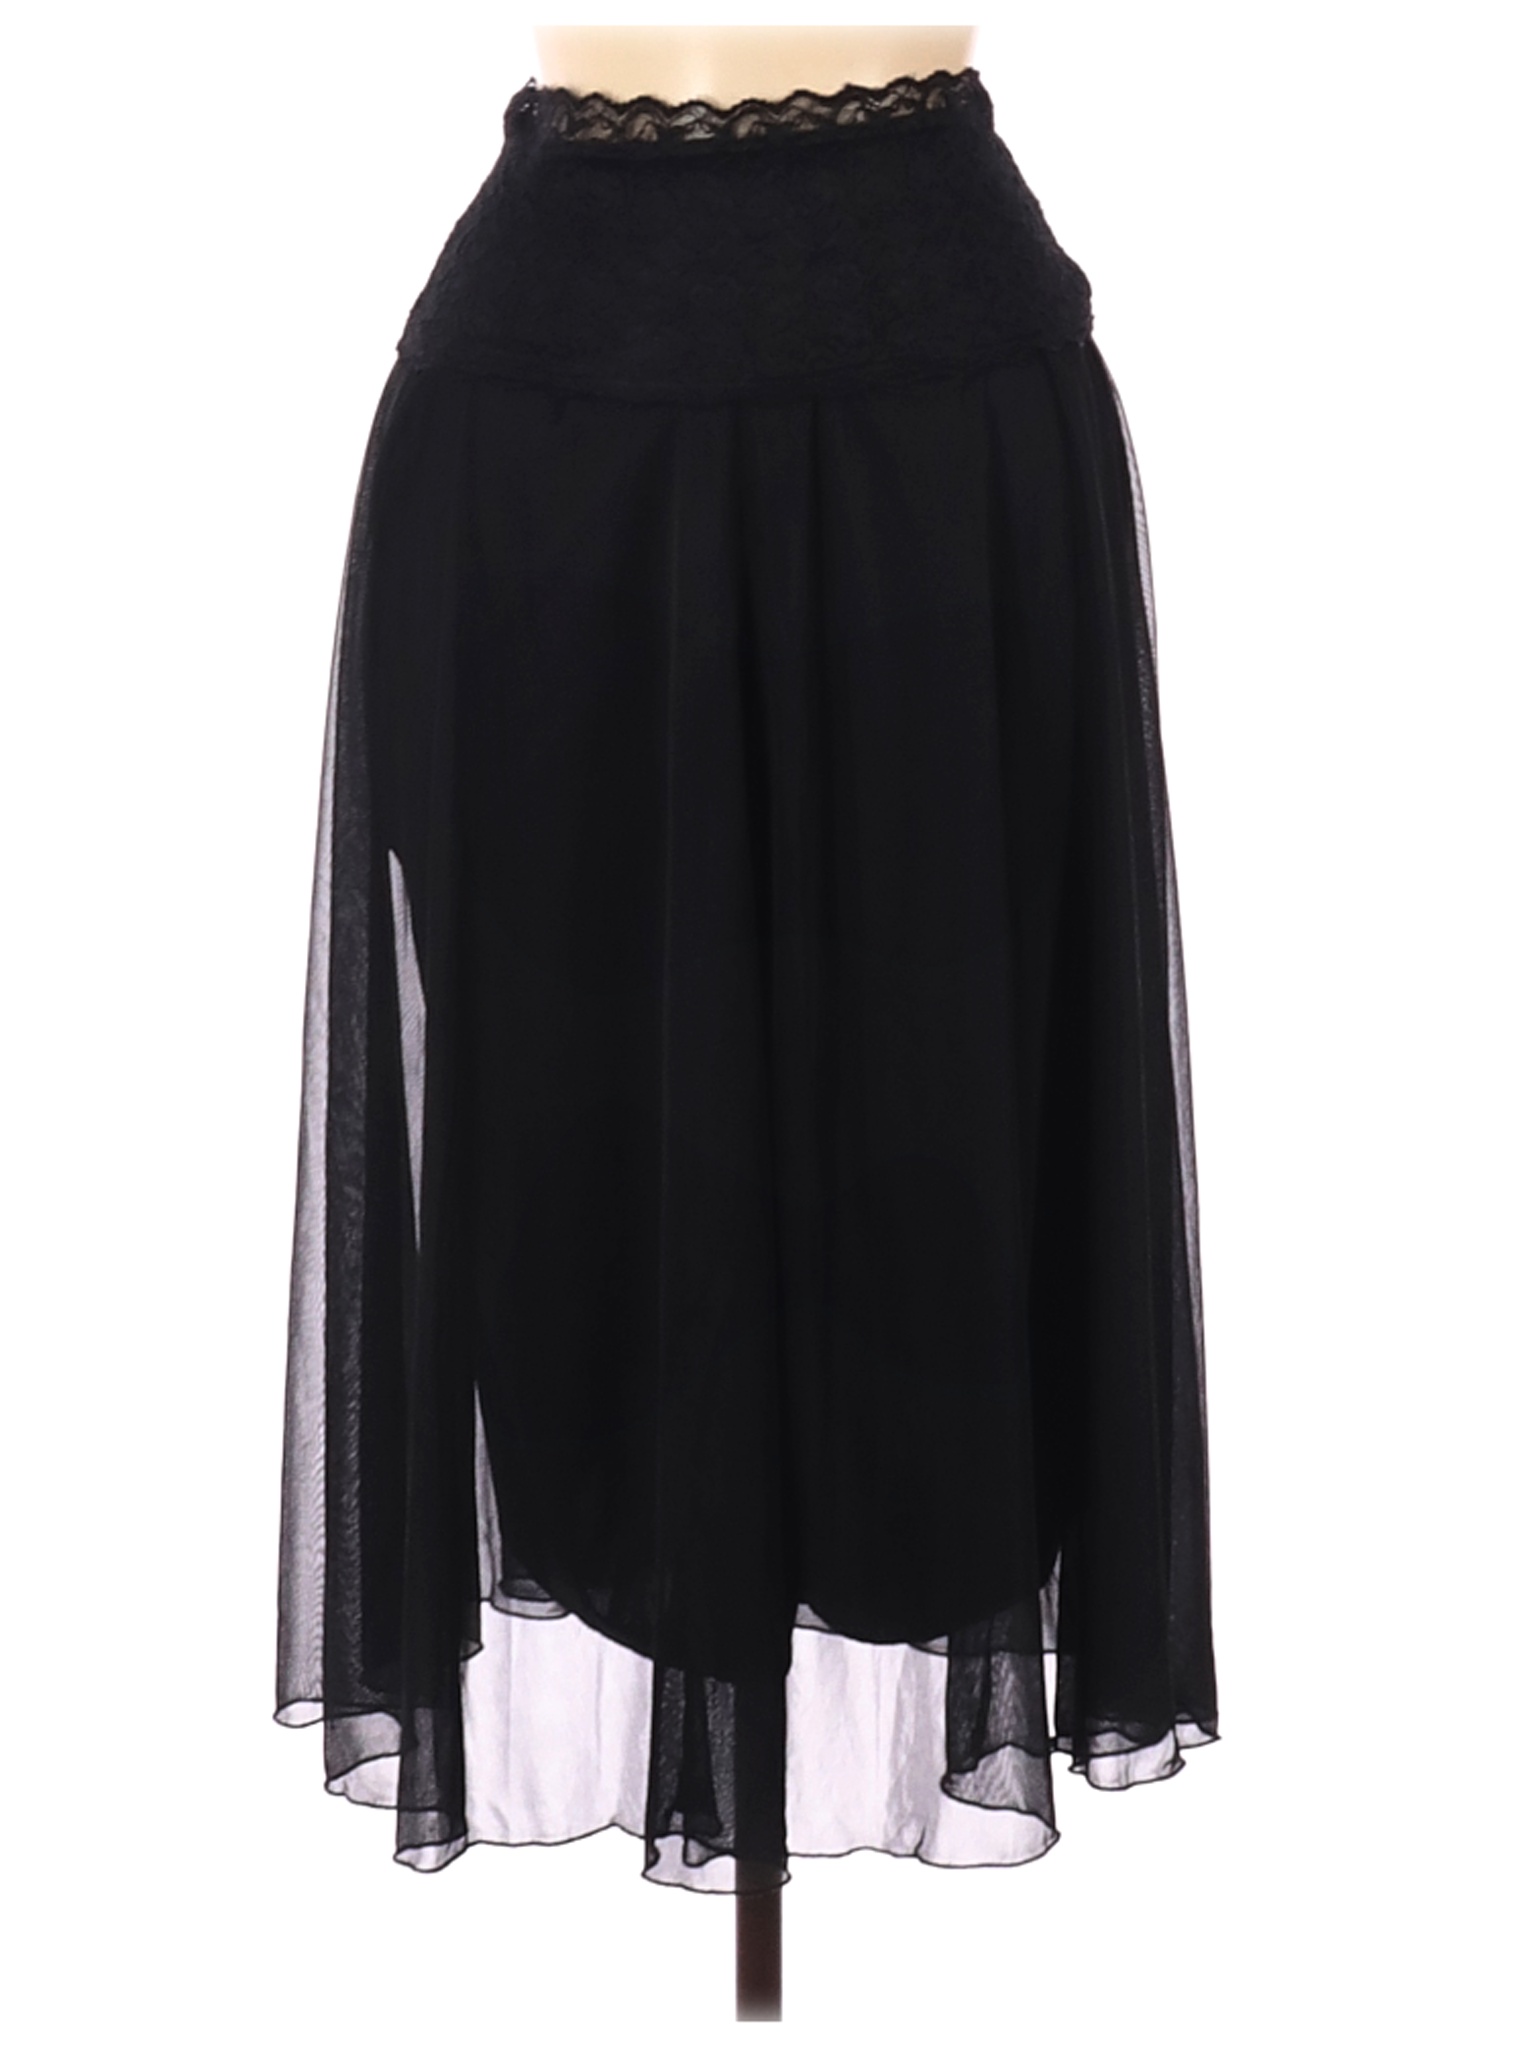 DressBarn Women Black Casual Skirt M | eBay